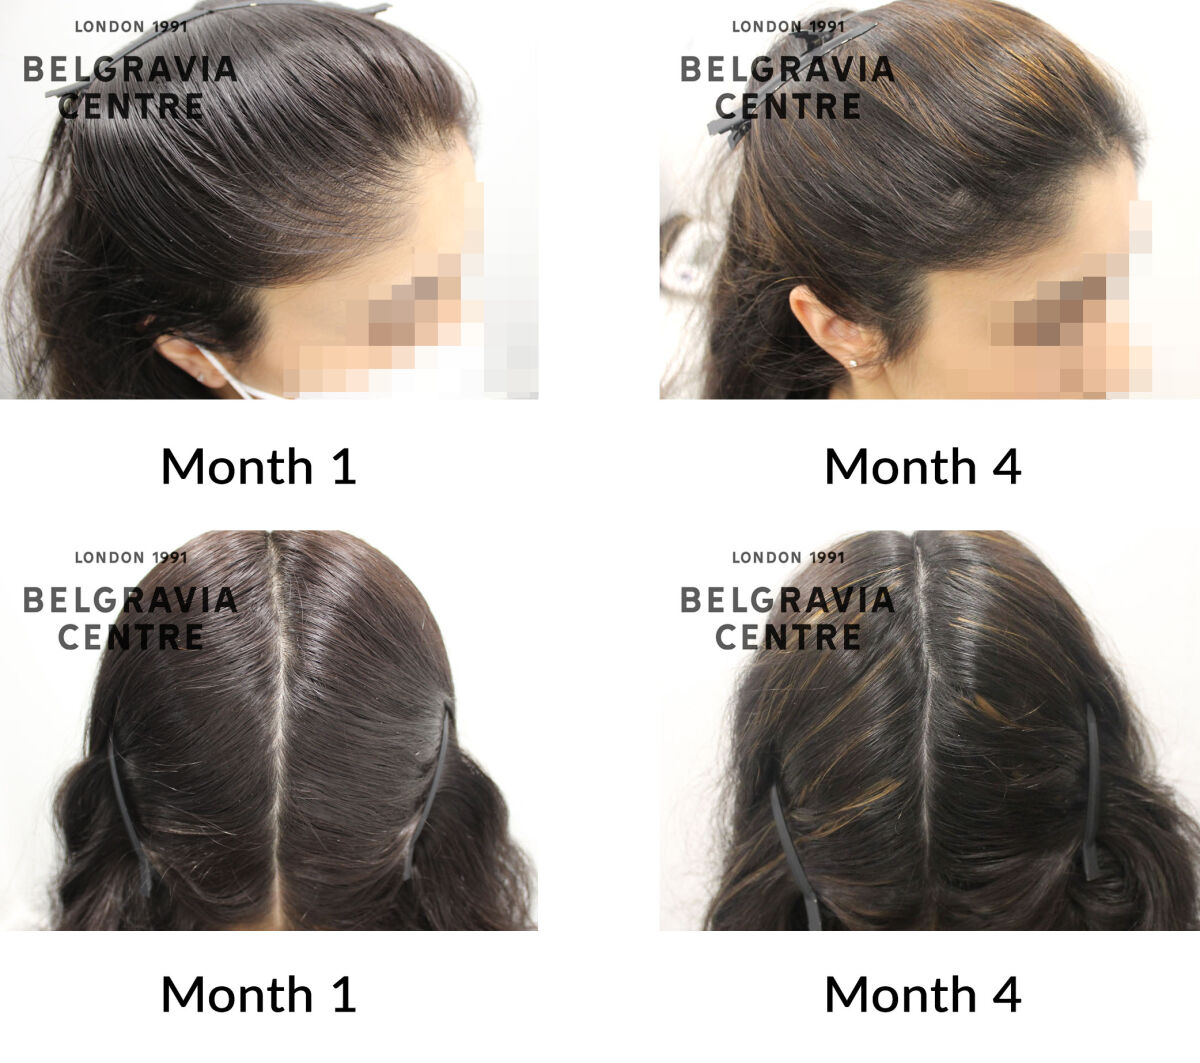 telogen effluvium and female pattern hair loss the belgravia centre 437861